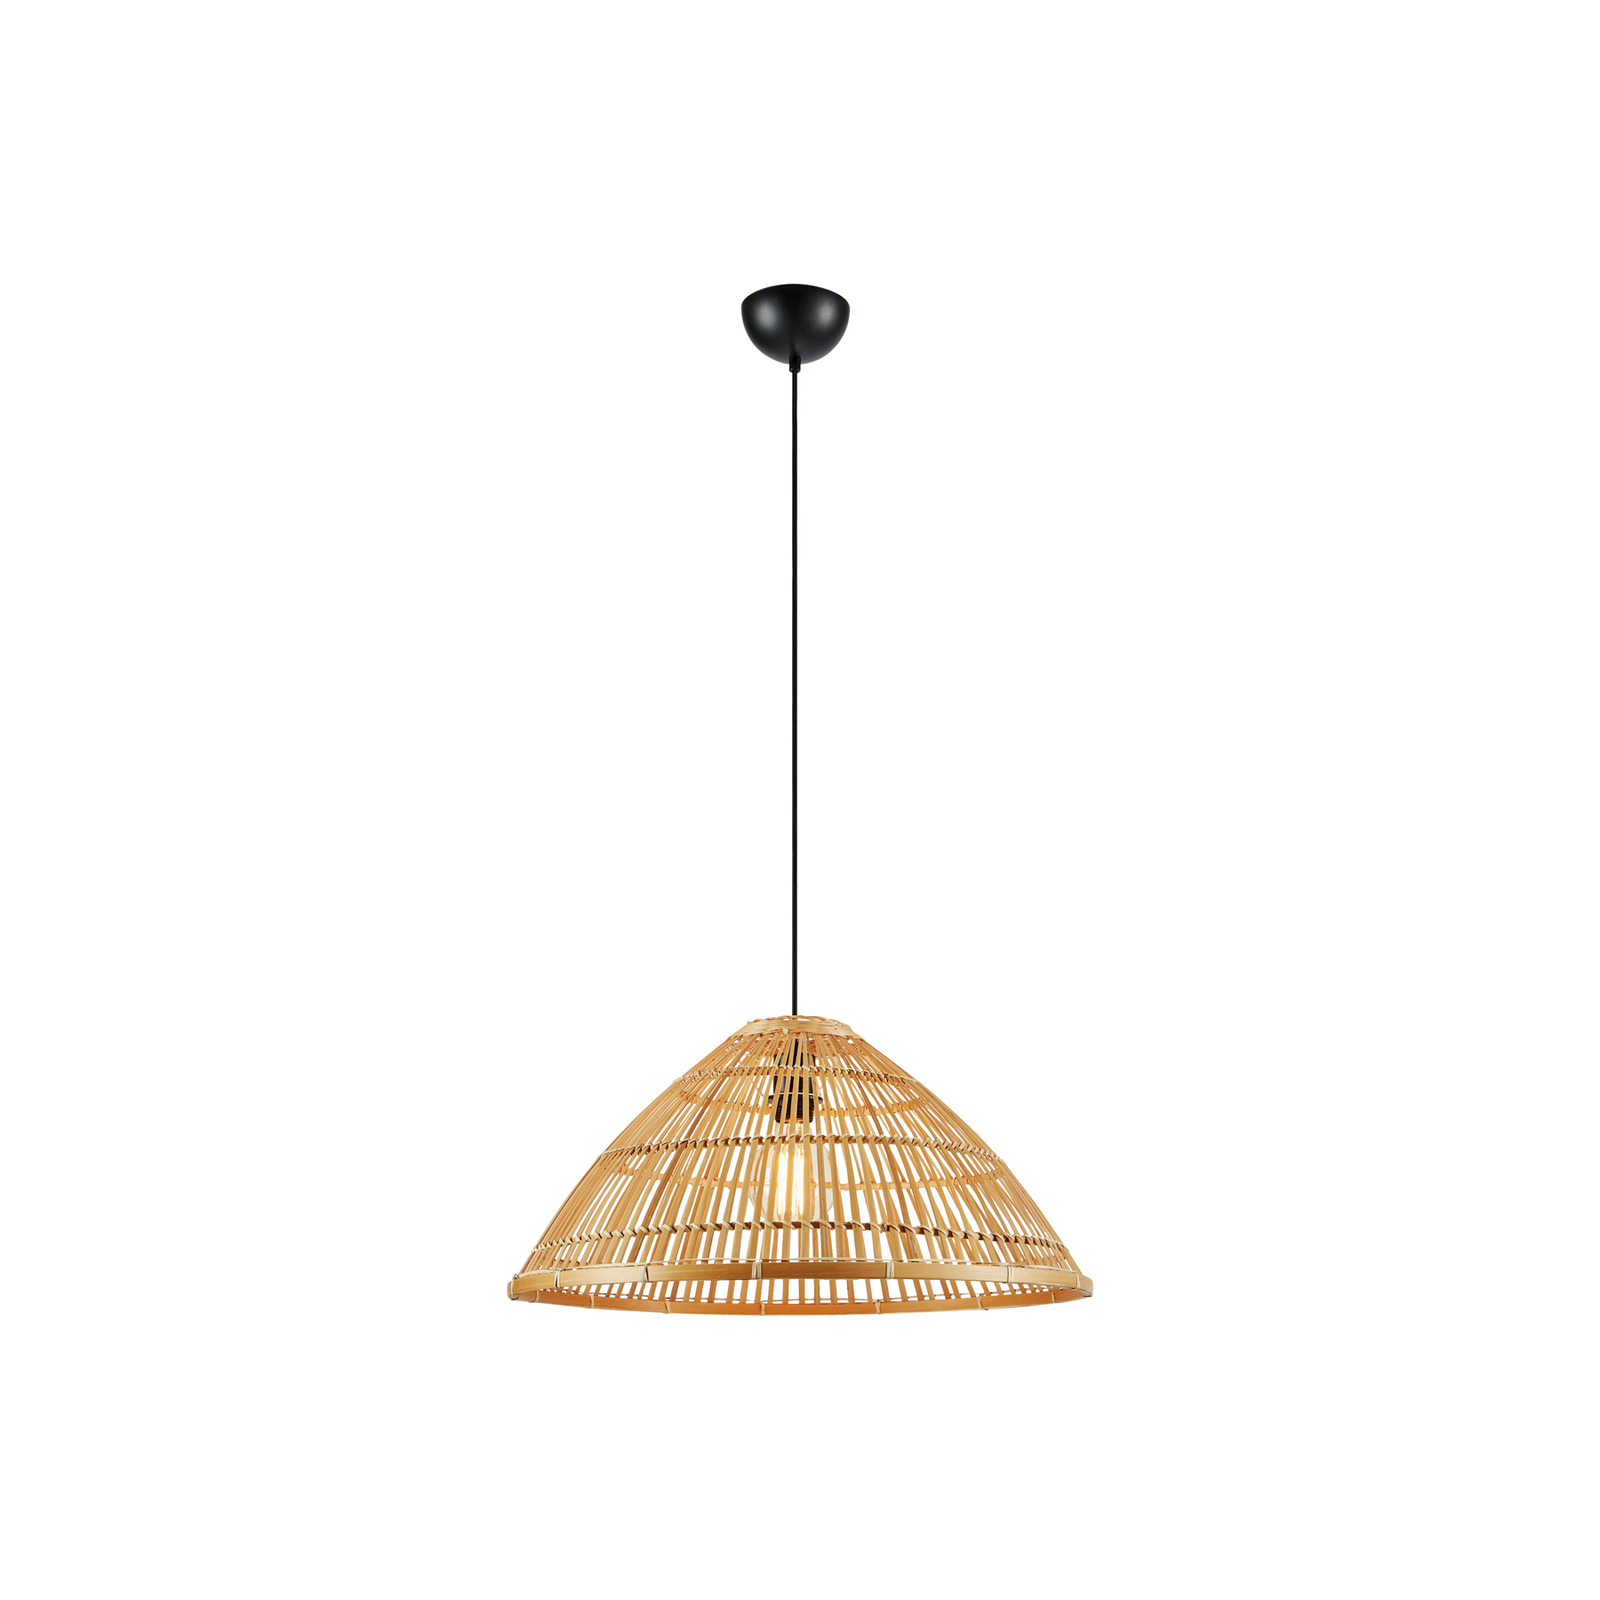 Capello pendant light made of bamboo, natural